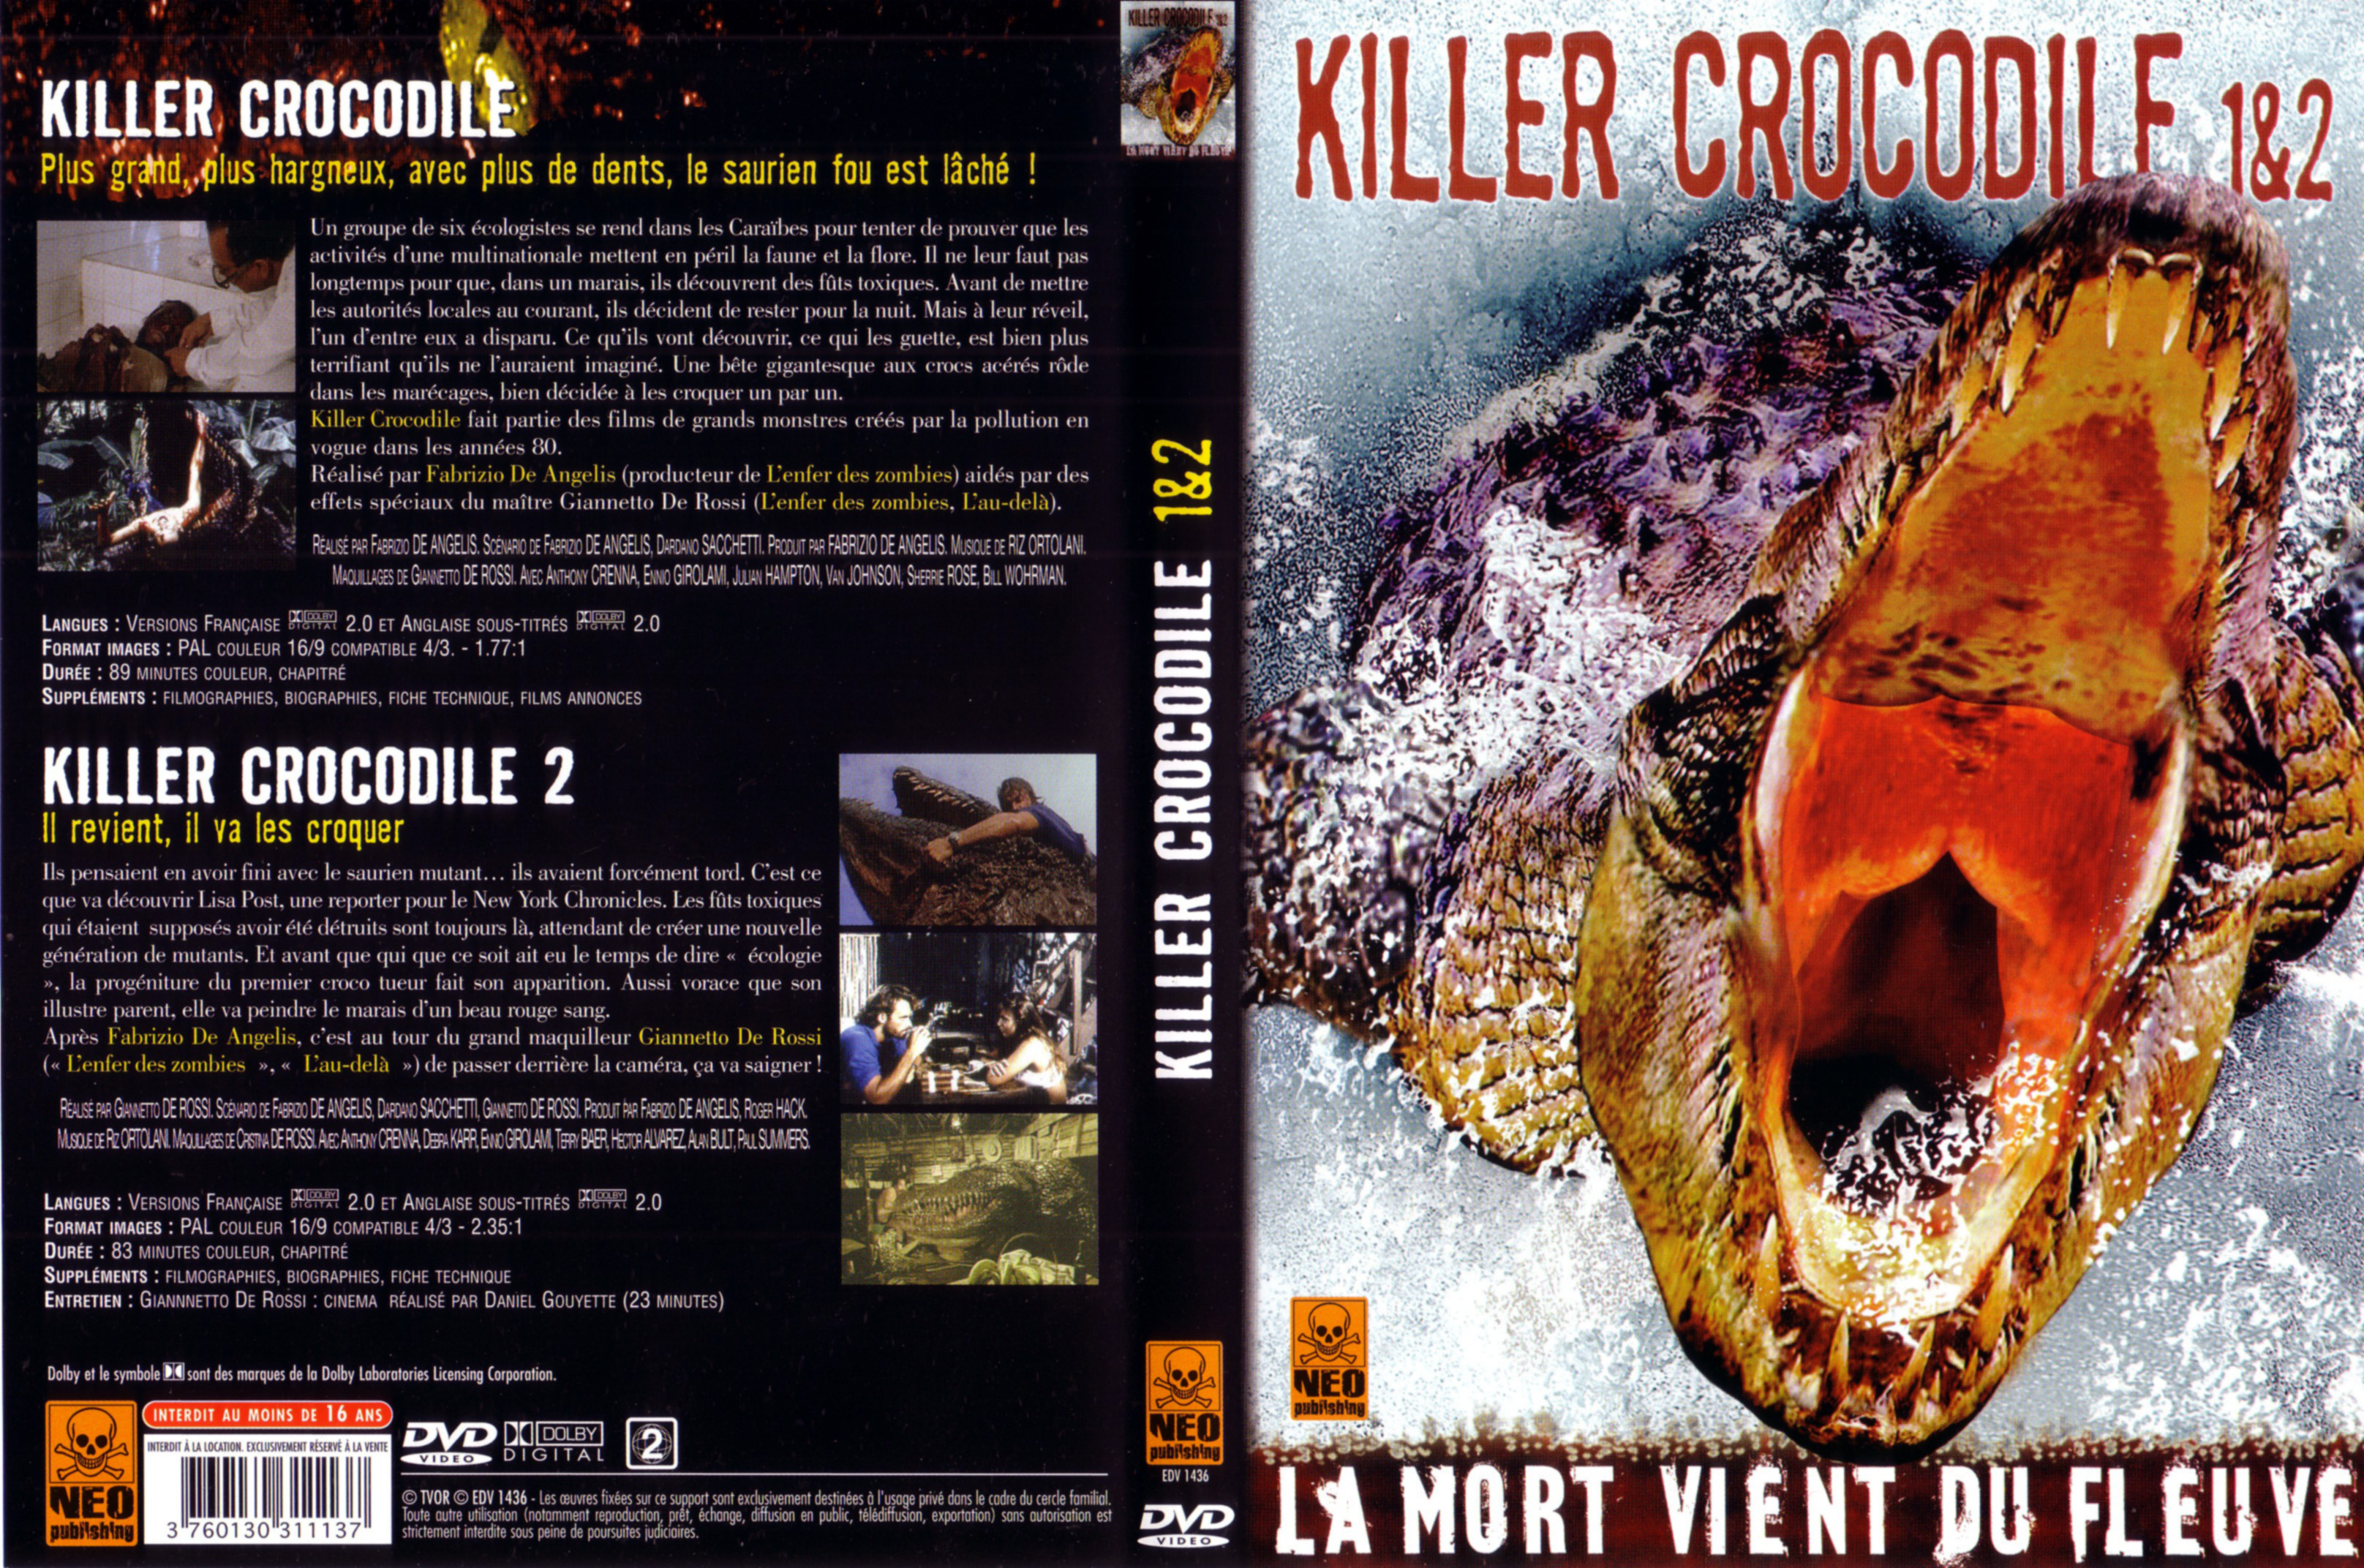 Jaquette DVD Killer crocodile 1 + 2 v3